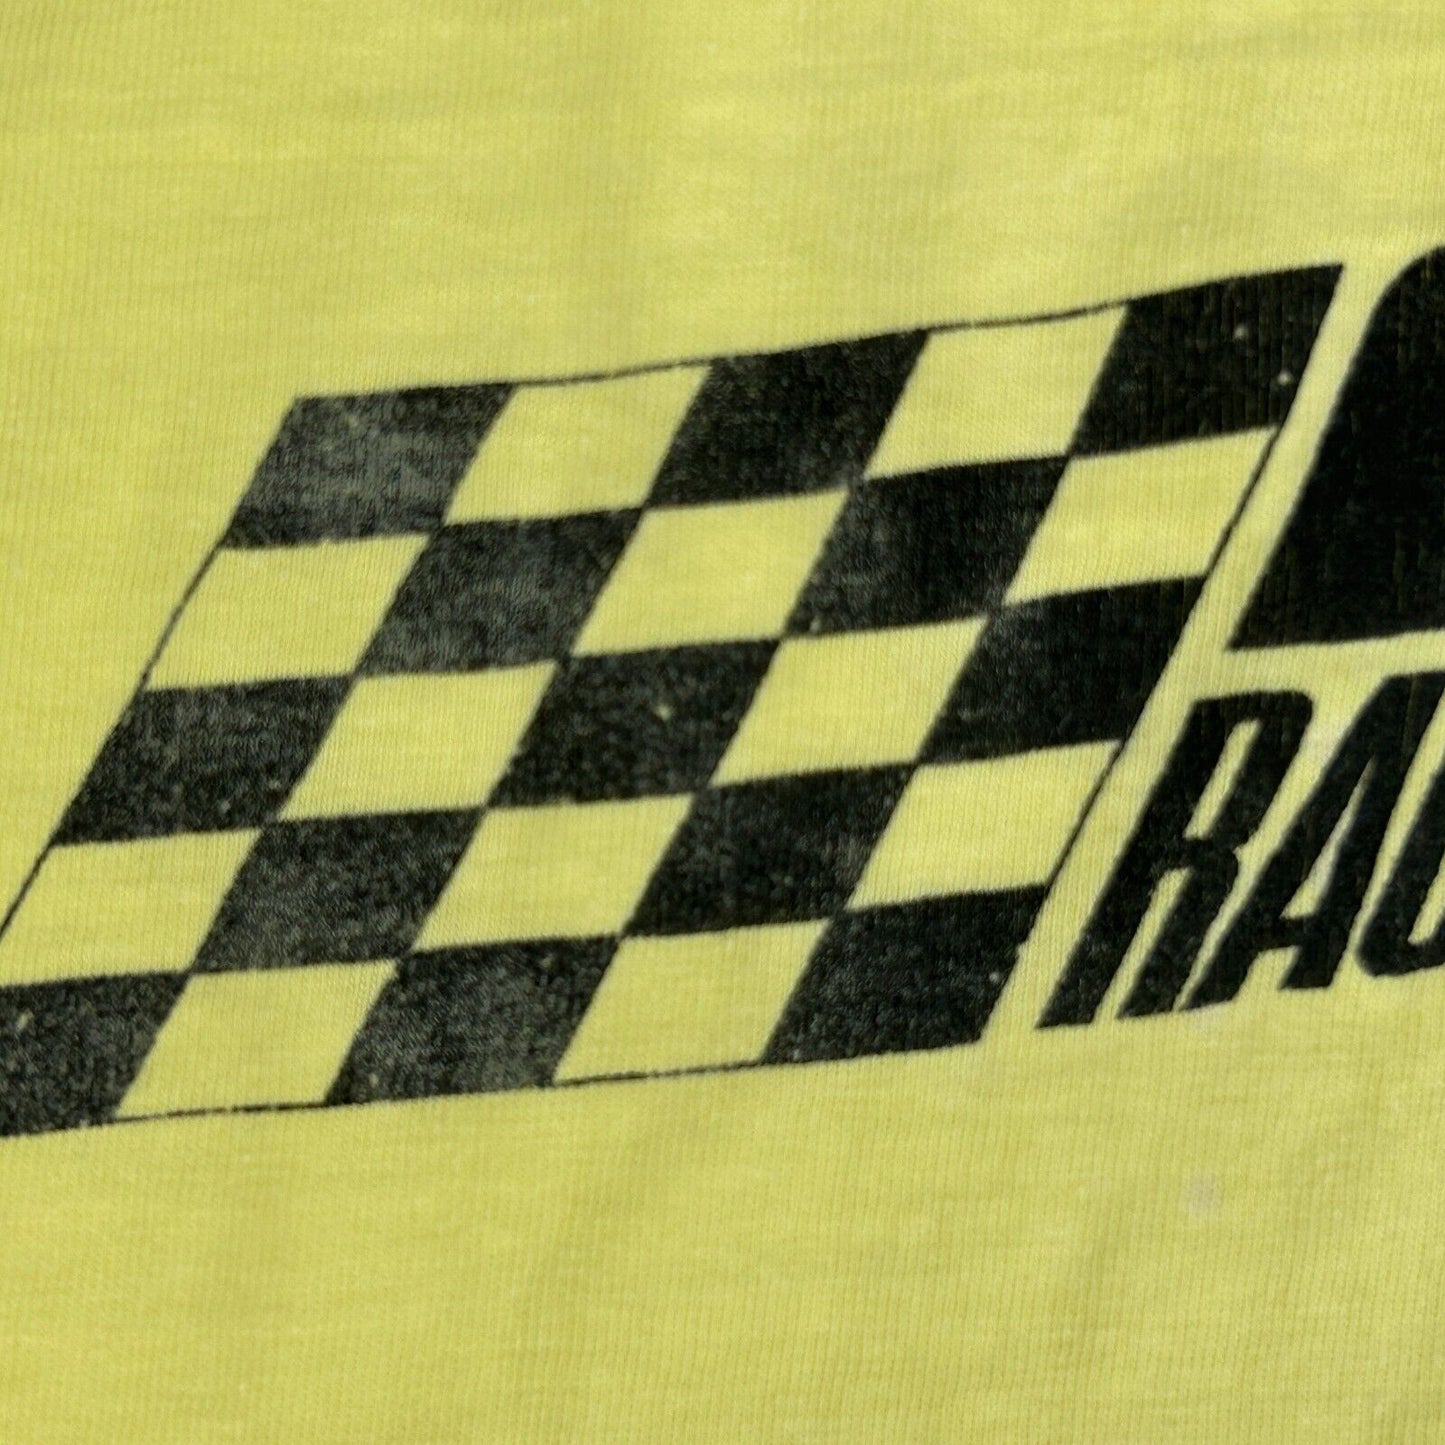 Dave Fuge Racing Enterprises Vintage 80s T Shirt Large Motorsports Mens Yellow